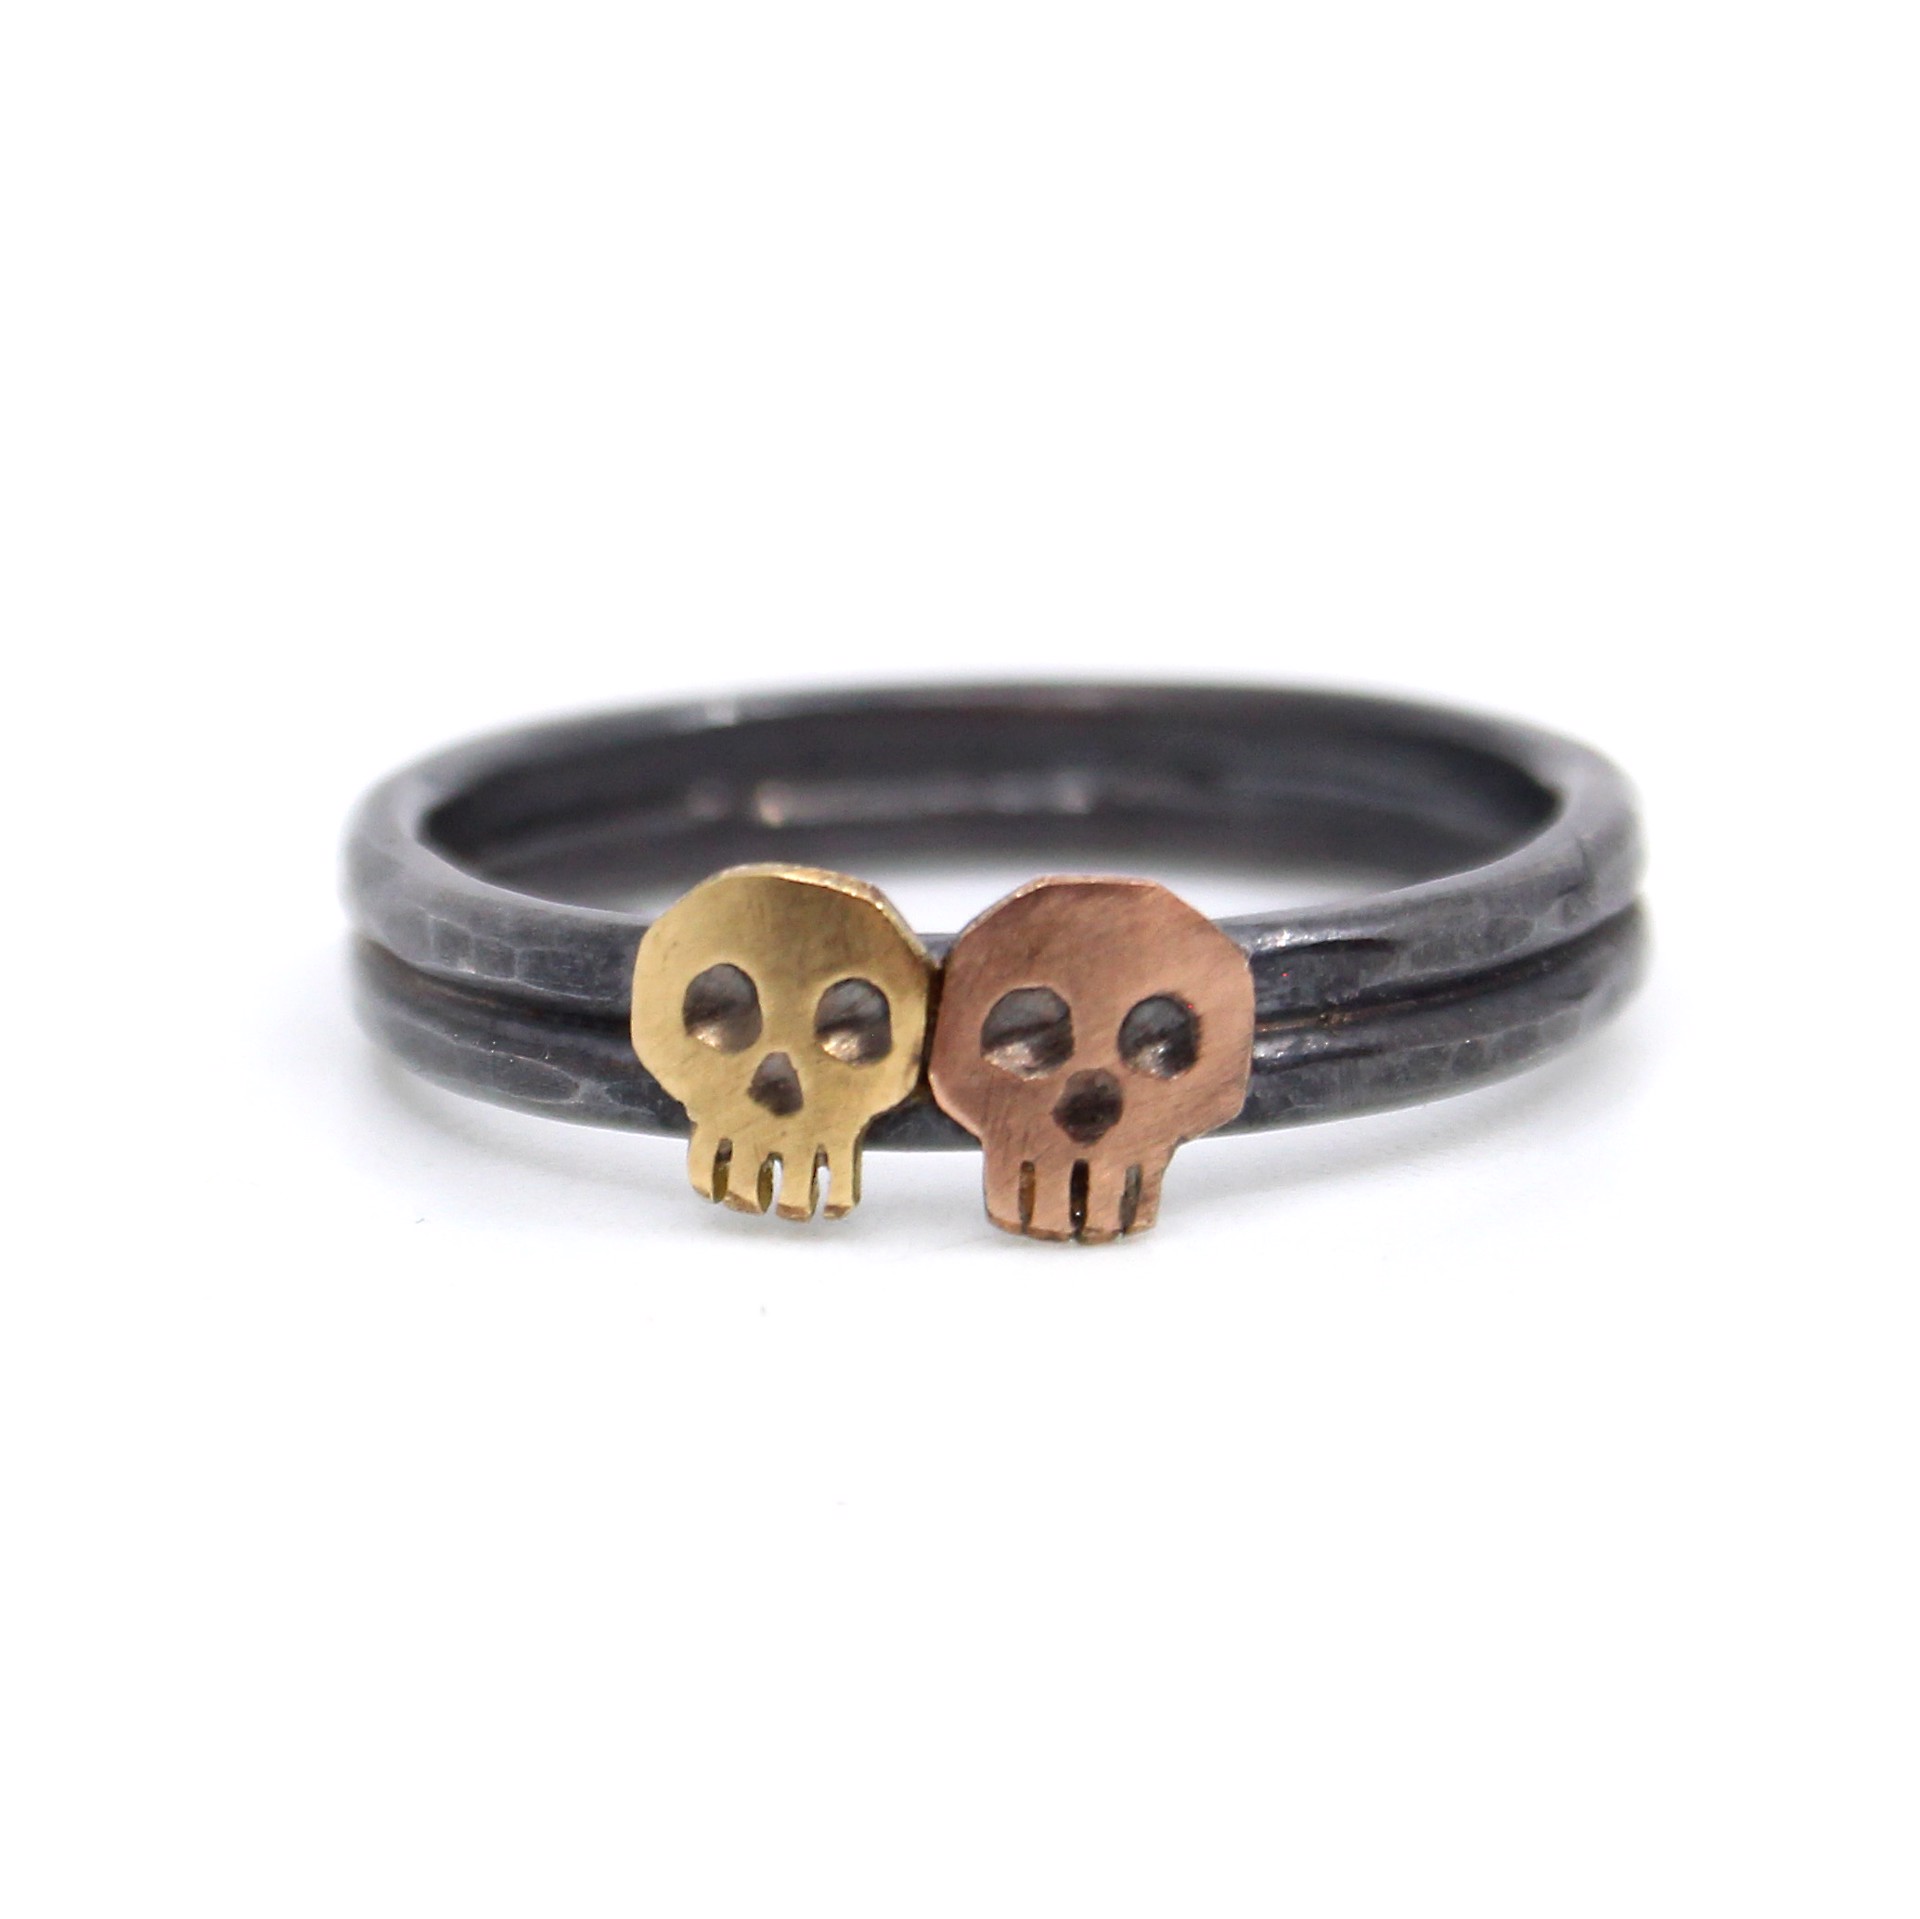 Skull Buddies Ring (Size 7) by Susan Elnora